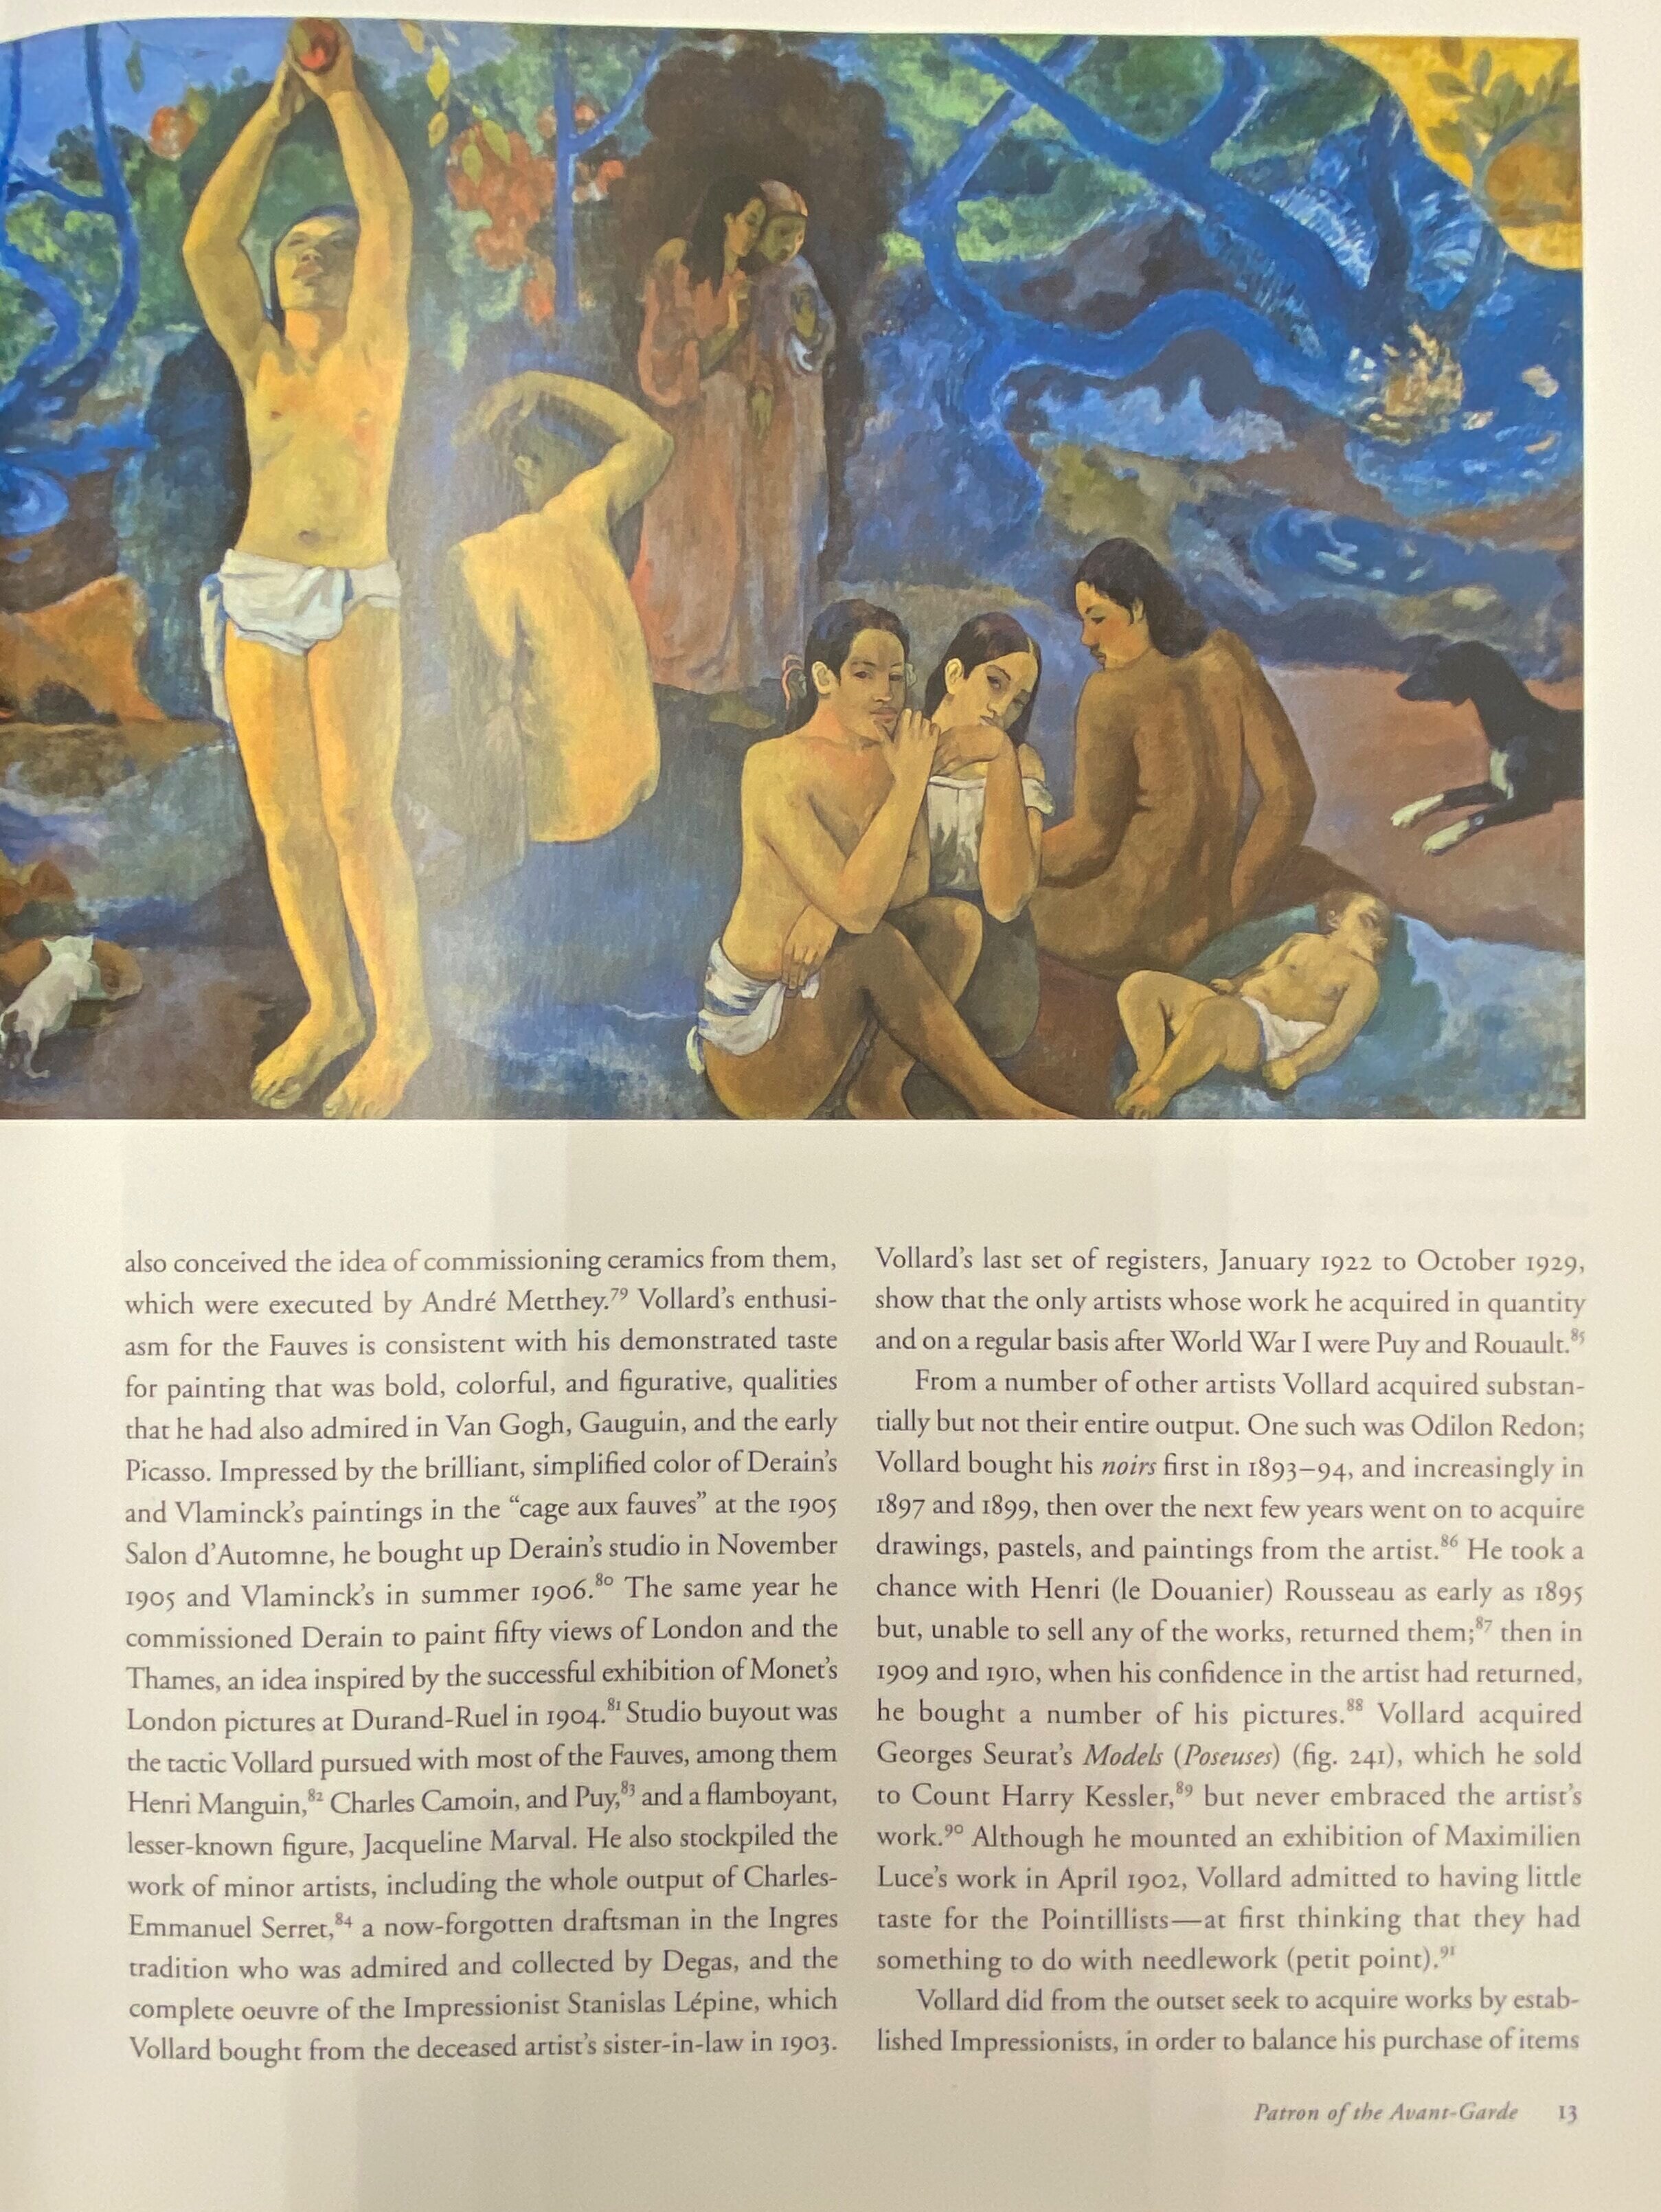 Cézanne to Picasso, Ambroise Vollard, Patron of the Avant-Garde, 2007 (Copy)